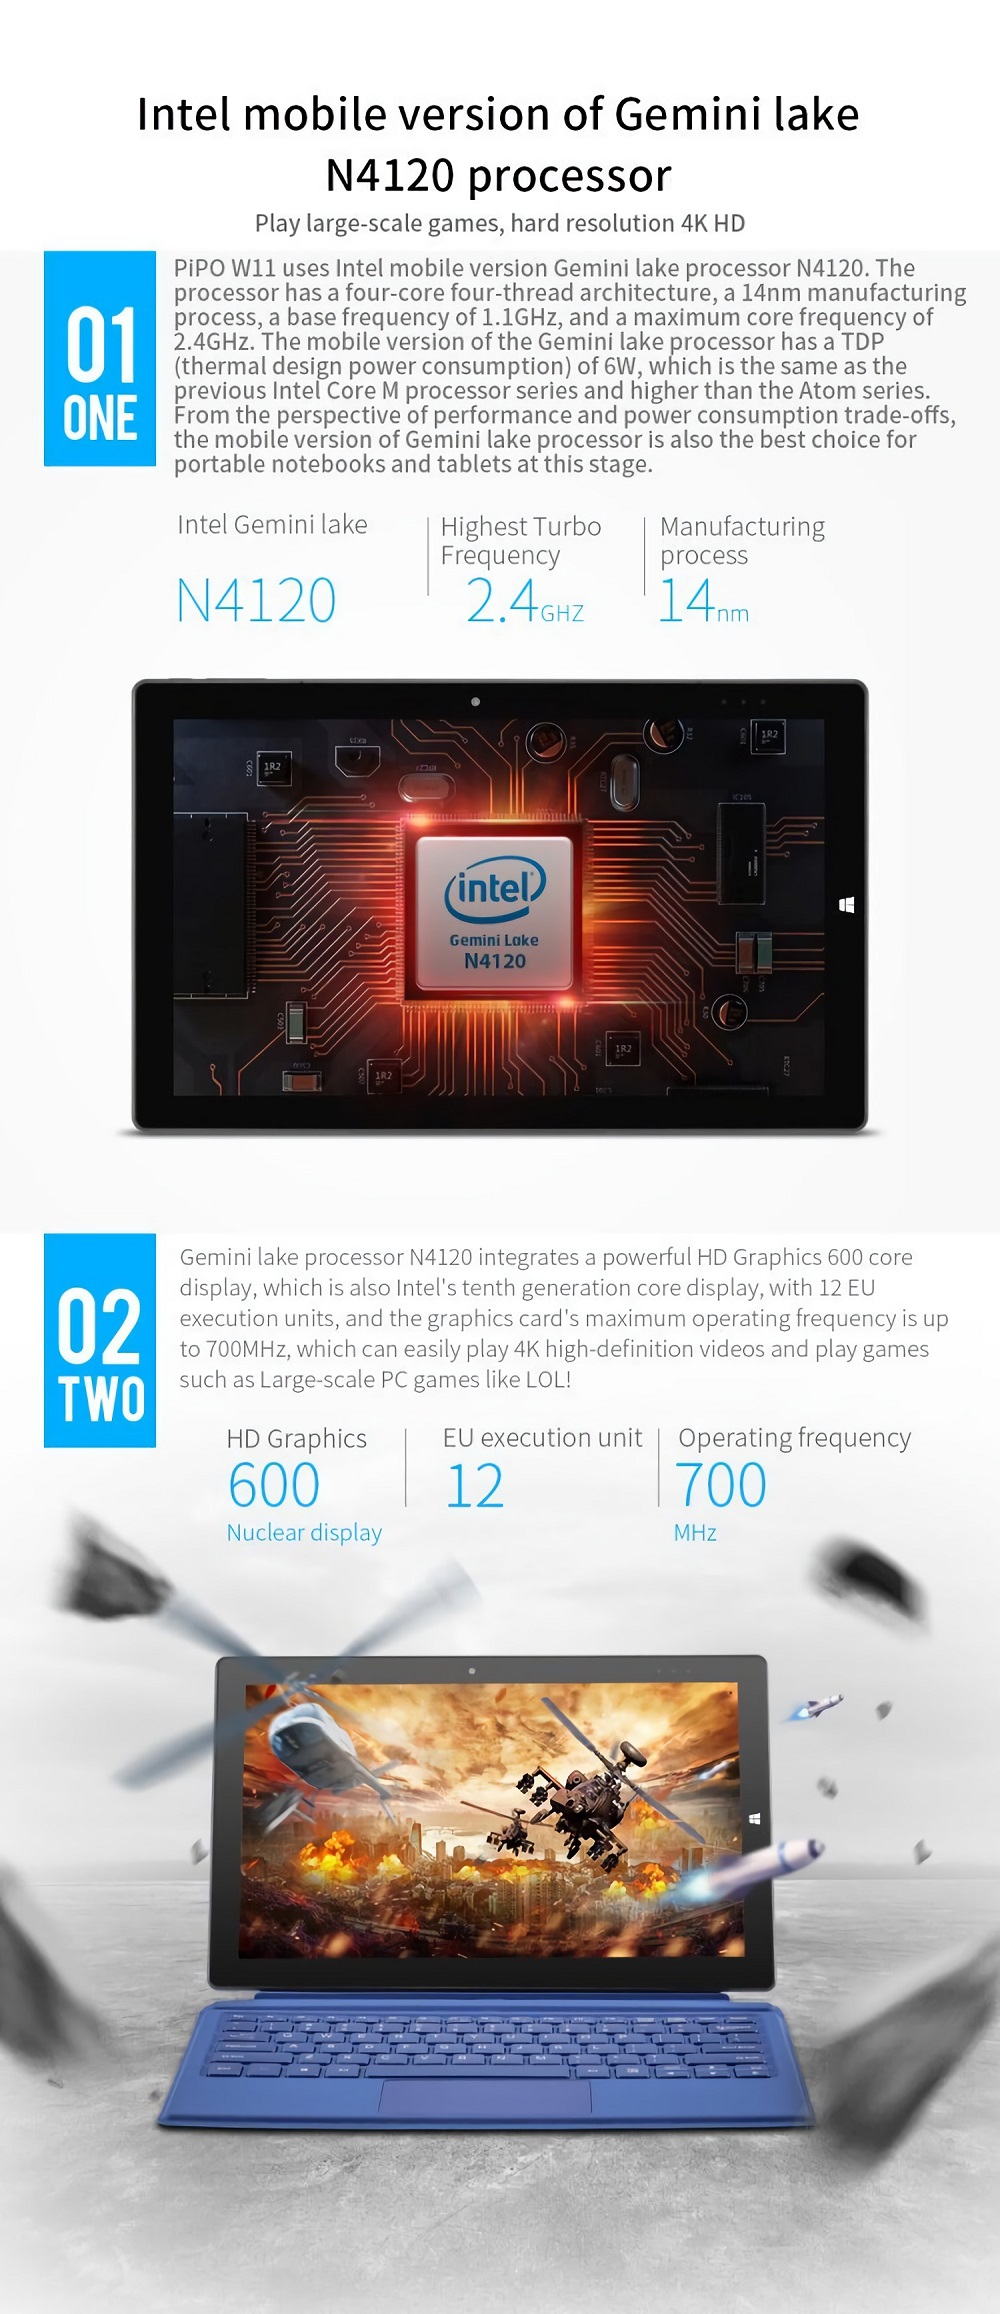 PIPO W11 Intel Gemini Lake N4120 8GB RAM 128GB ROM 11.6 Inch Windows 10 Tablet with Keyboard Stylus Pen 29